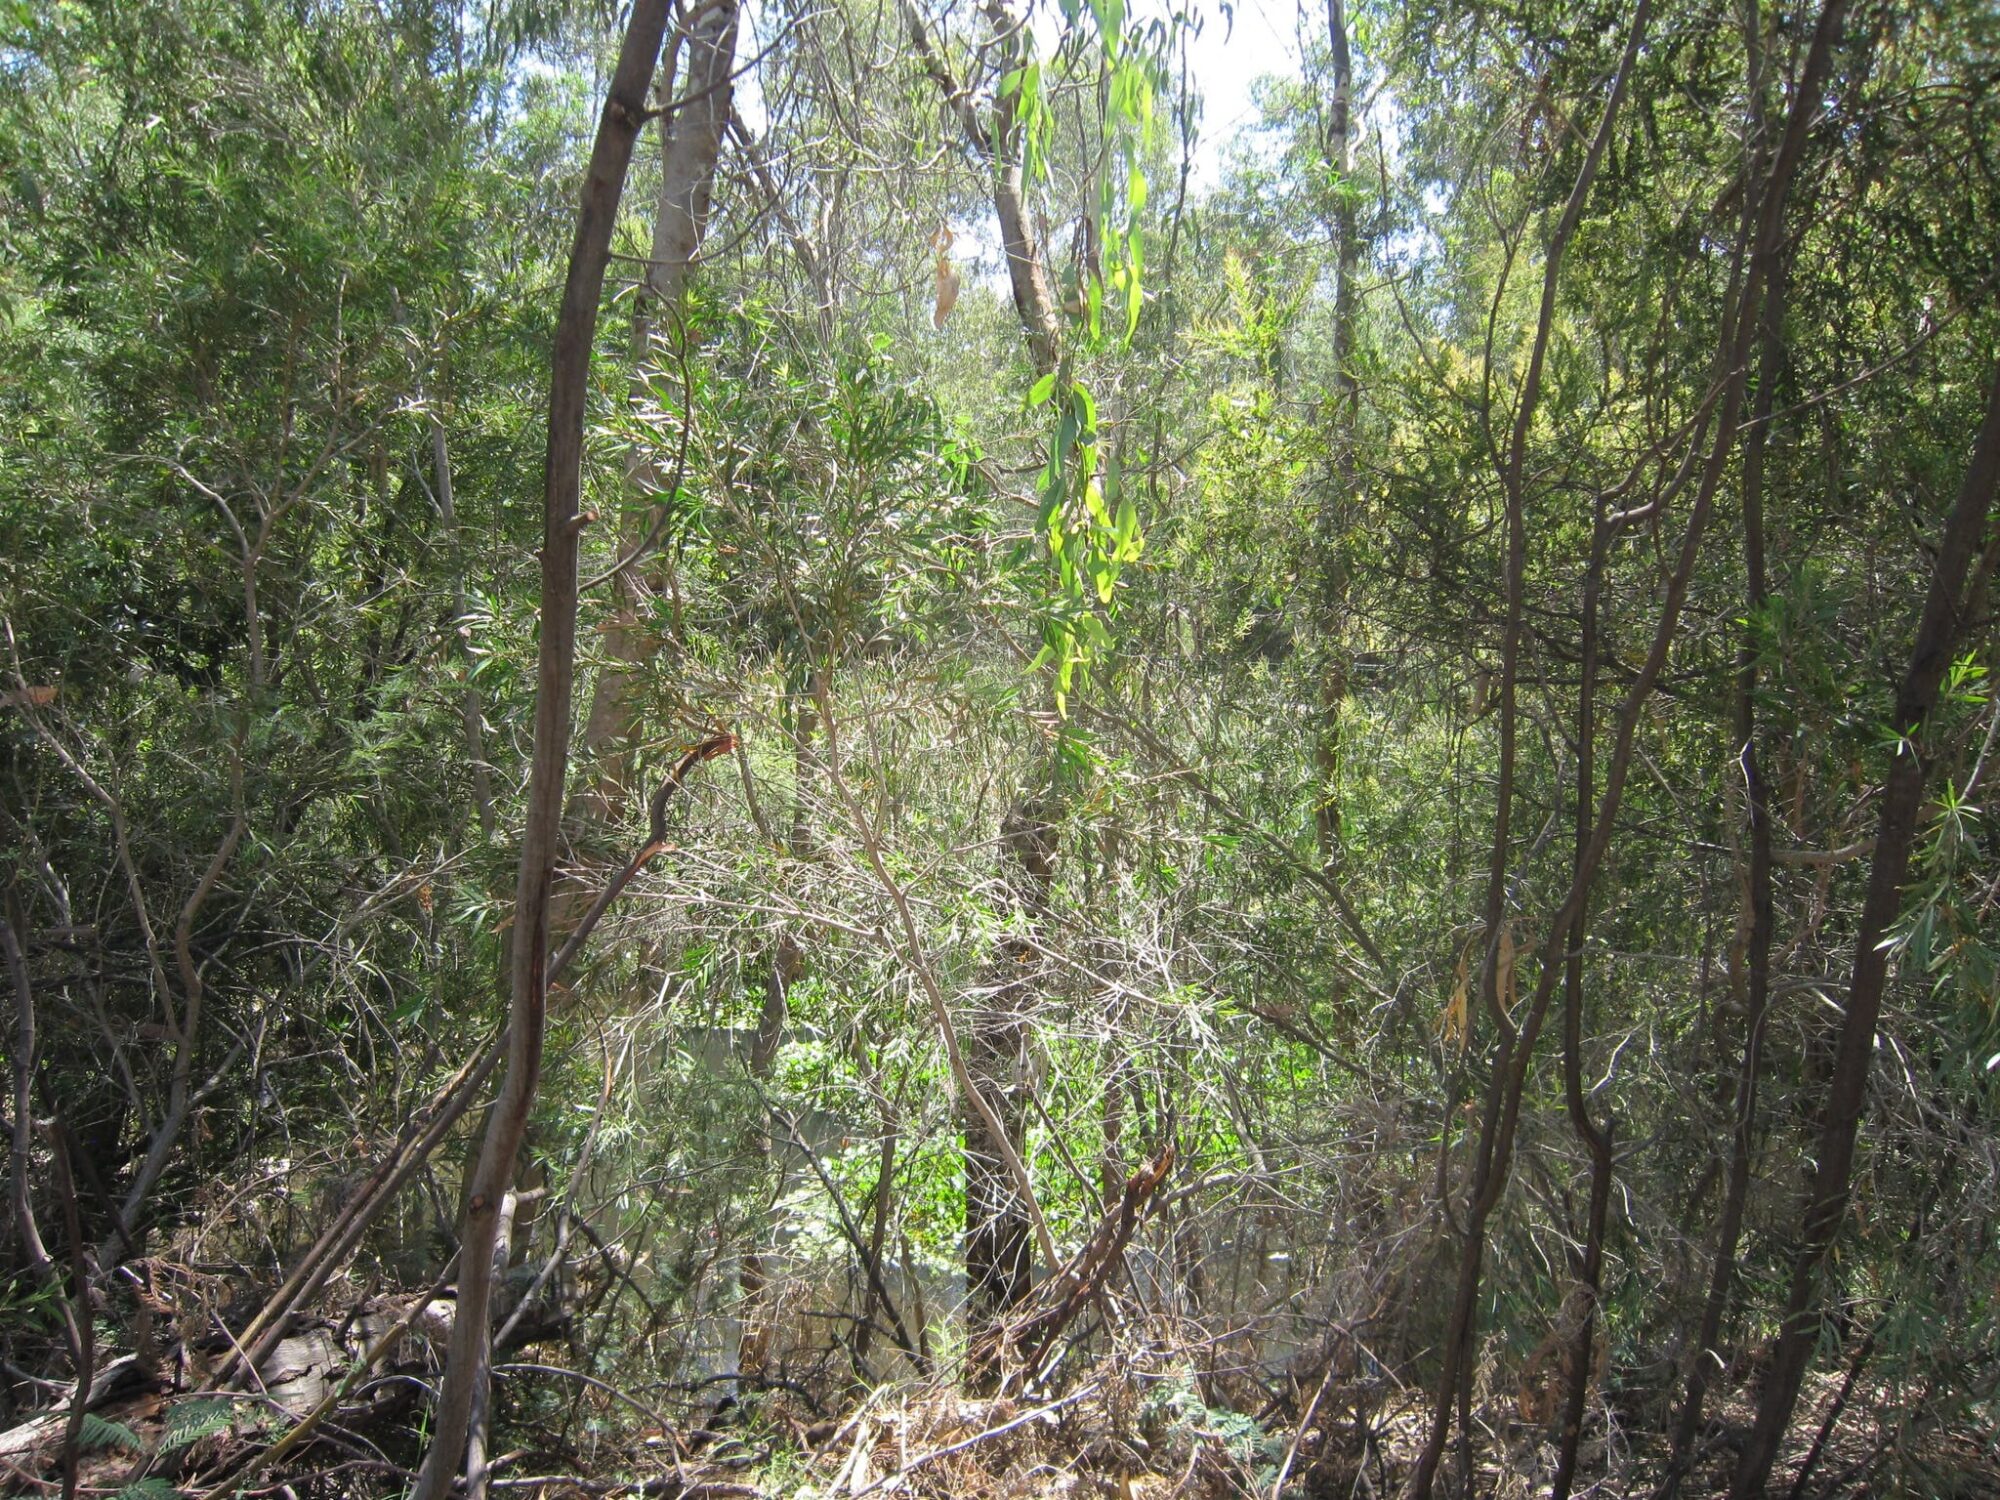 bush wetlands gum trees vegetation